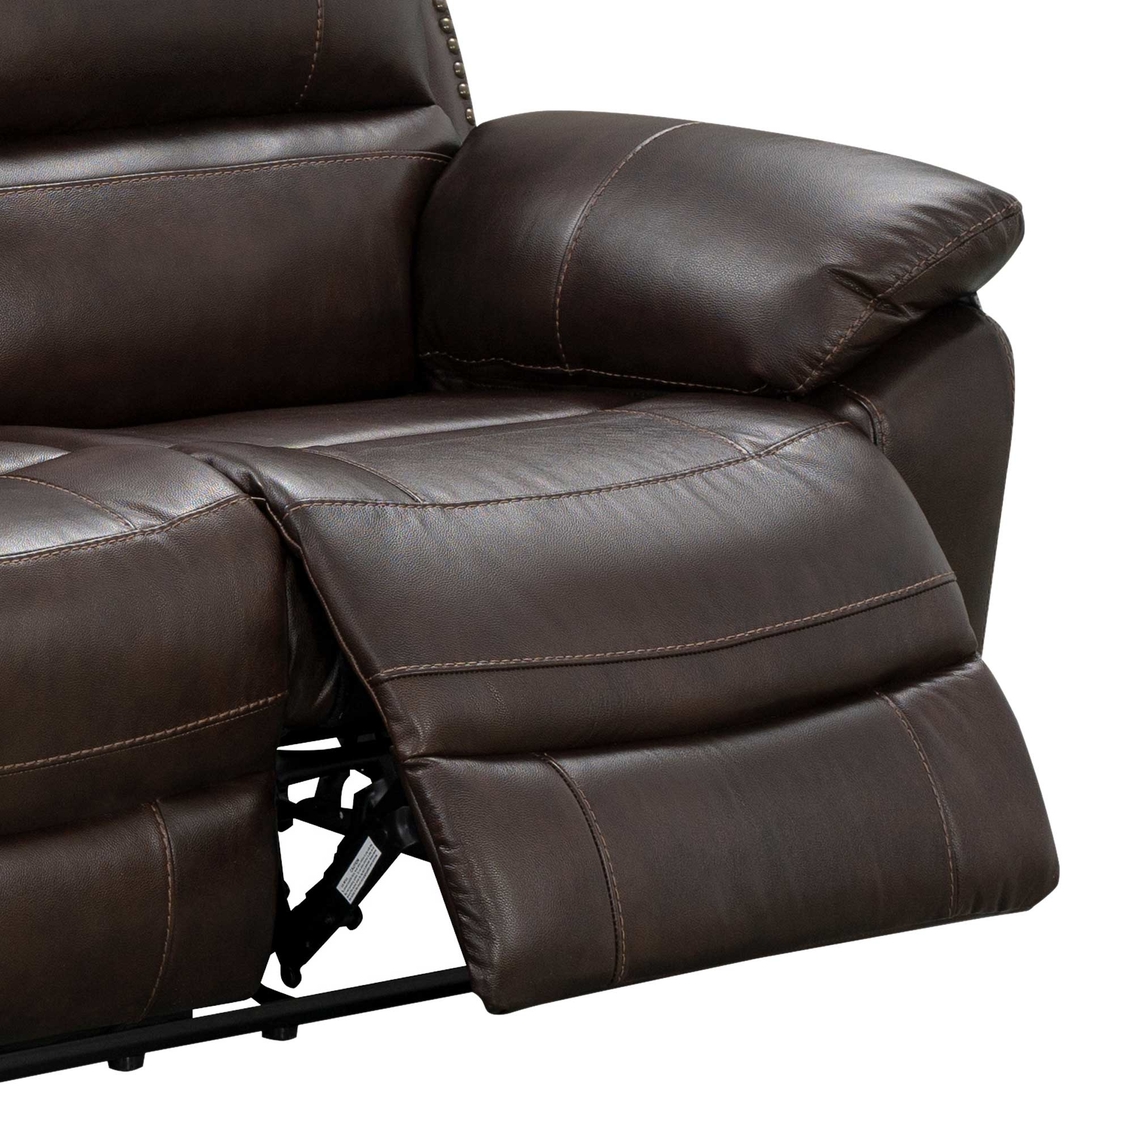 Abbyson Sorento Leather Reclining Sofa - Image 4 of 7